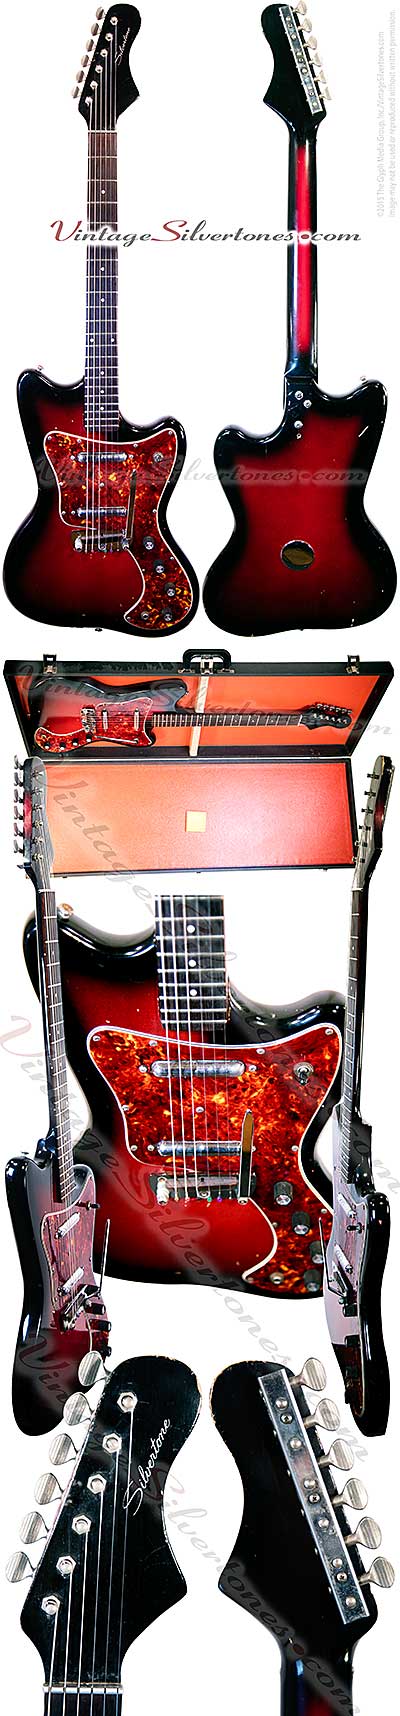 Silvertone - Danelectro-made - 1452 solid body electric guitar, tortoise shell pickguard, circa 1965